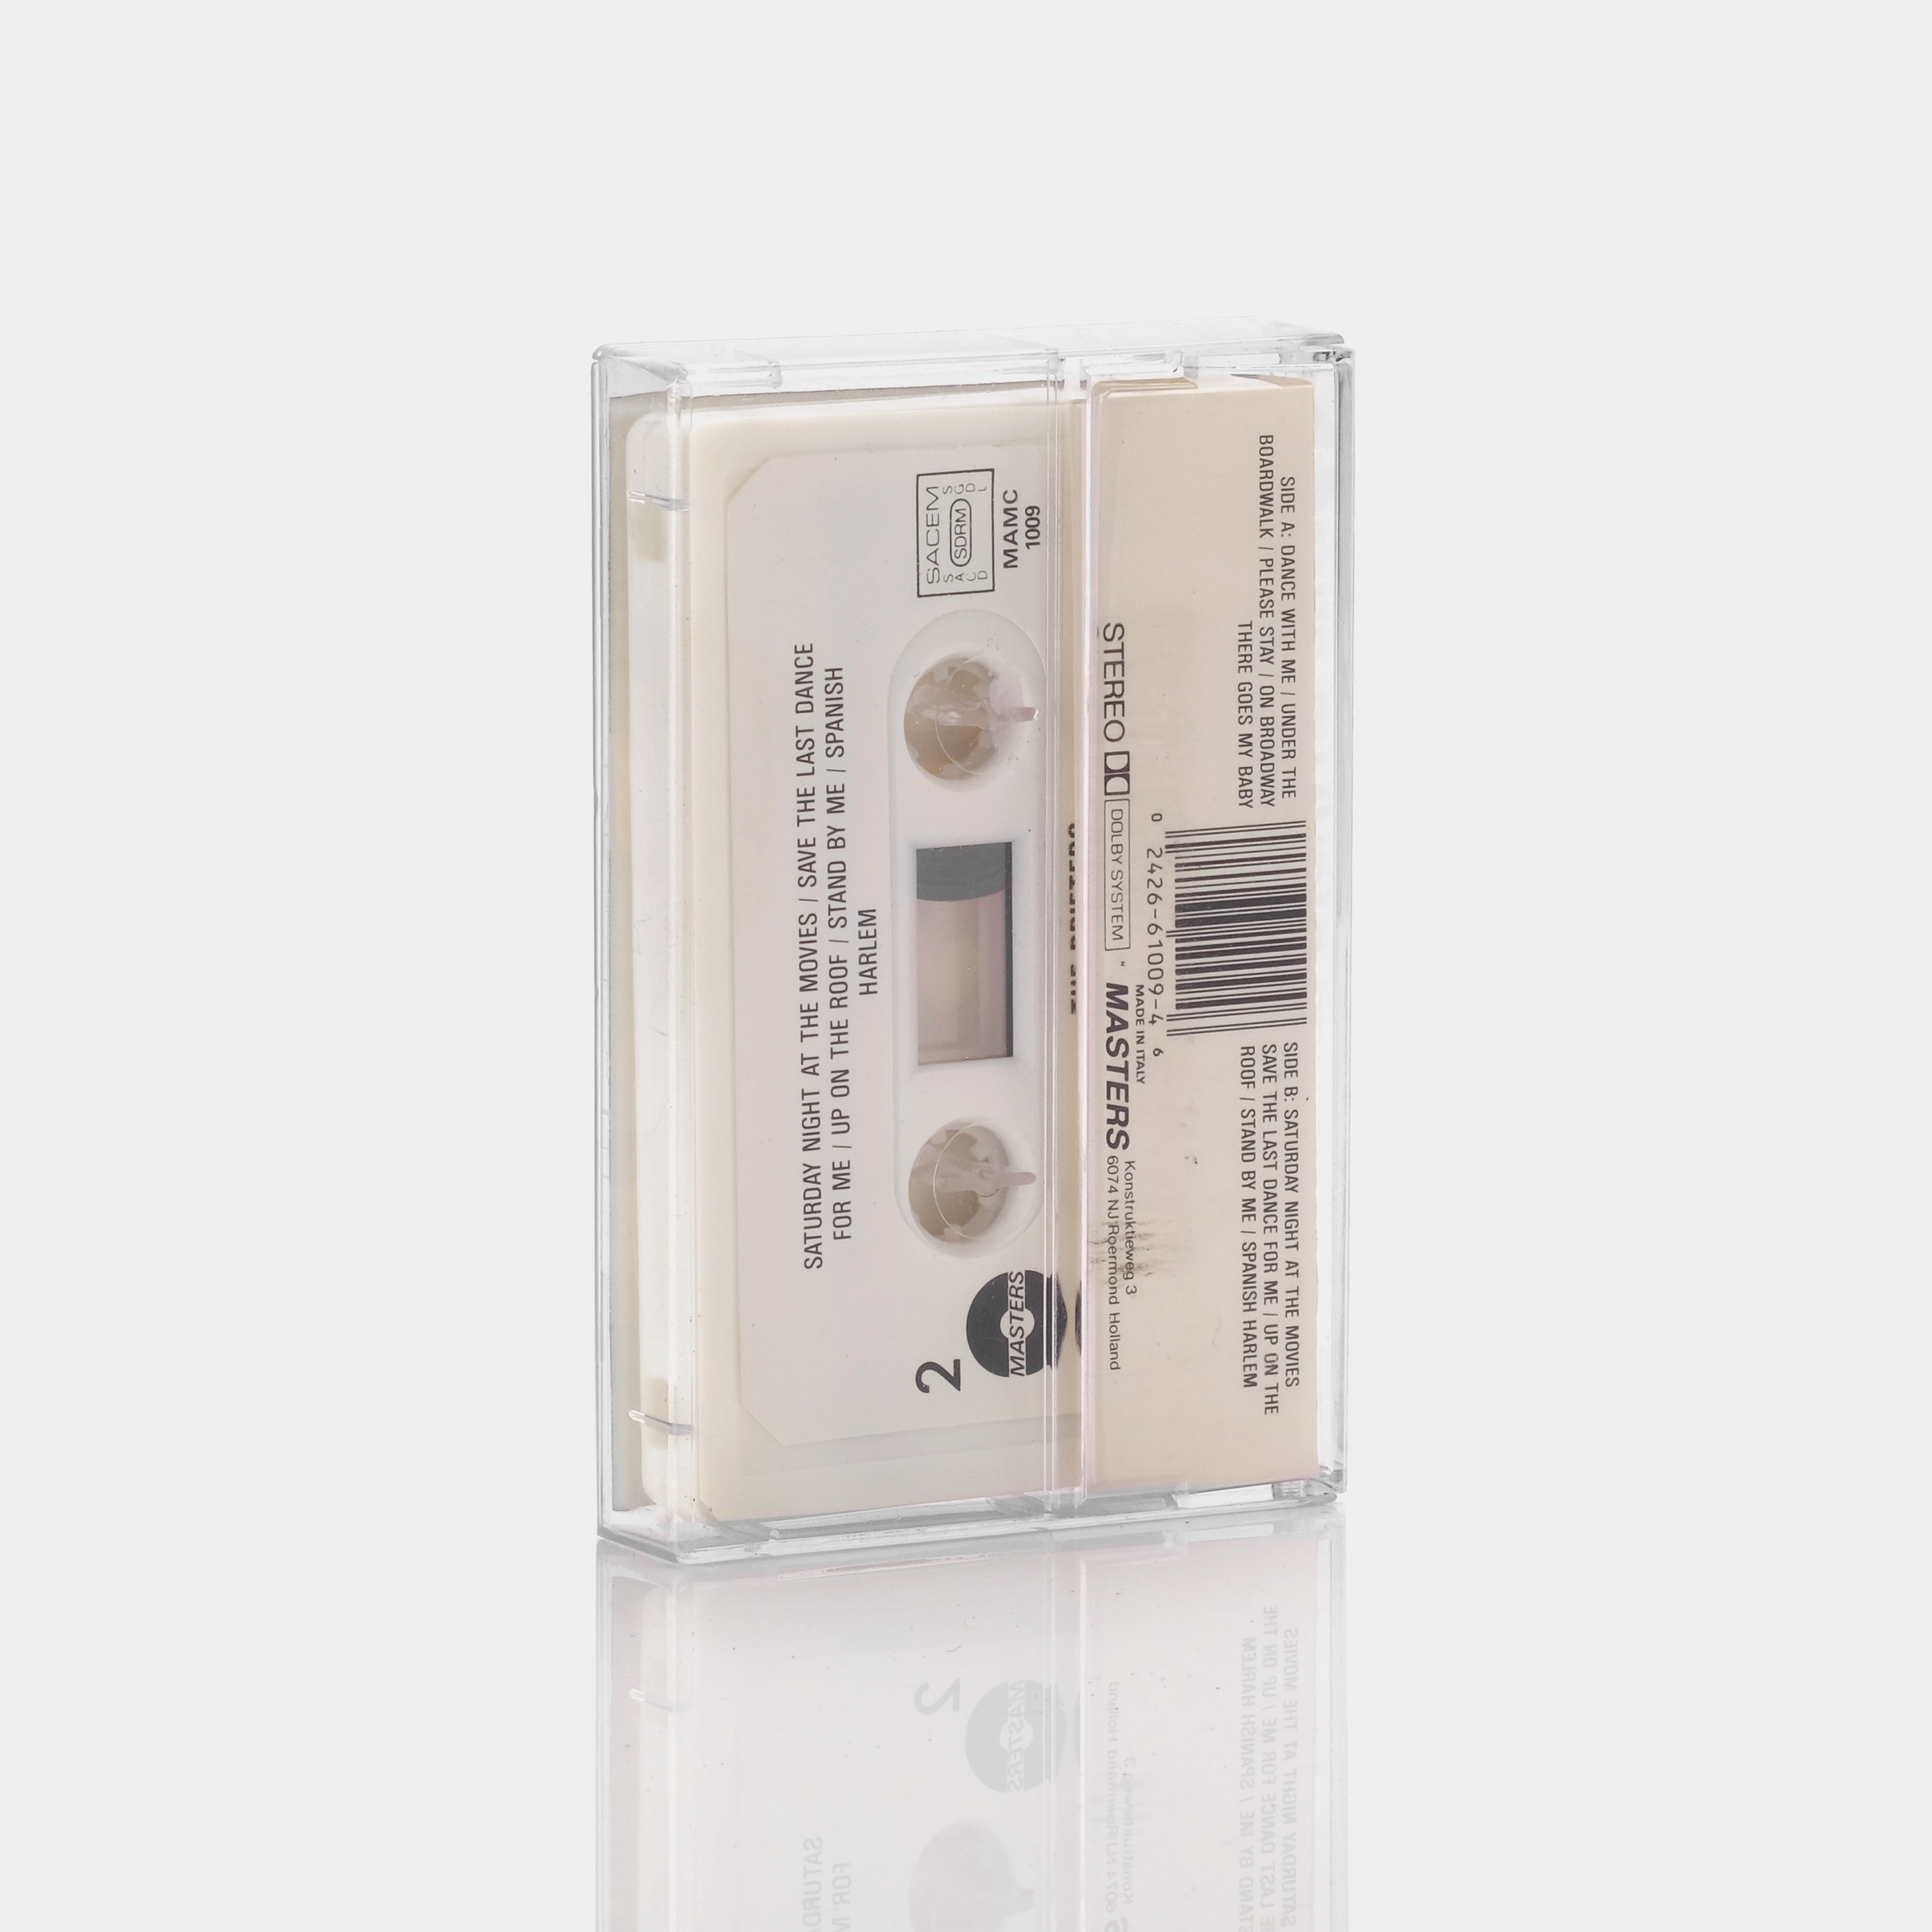 The Drifters - Golden Hits Cassette Tape